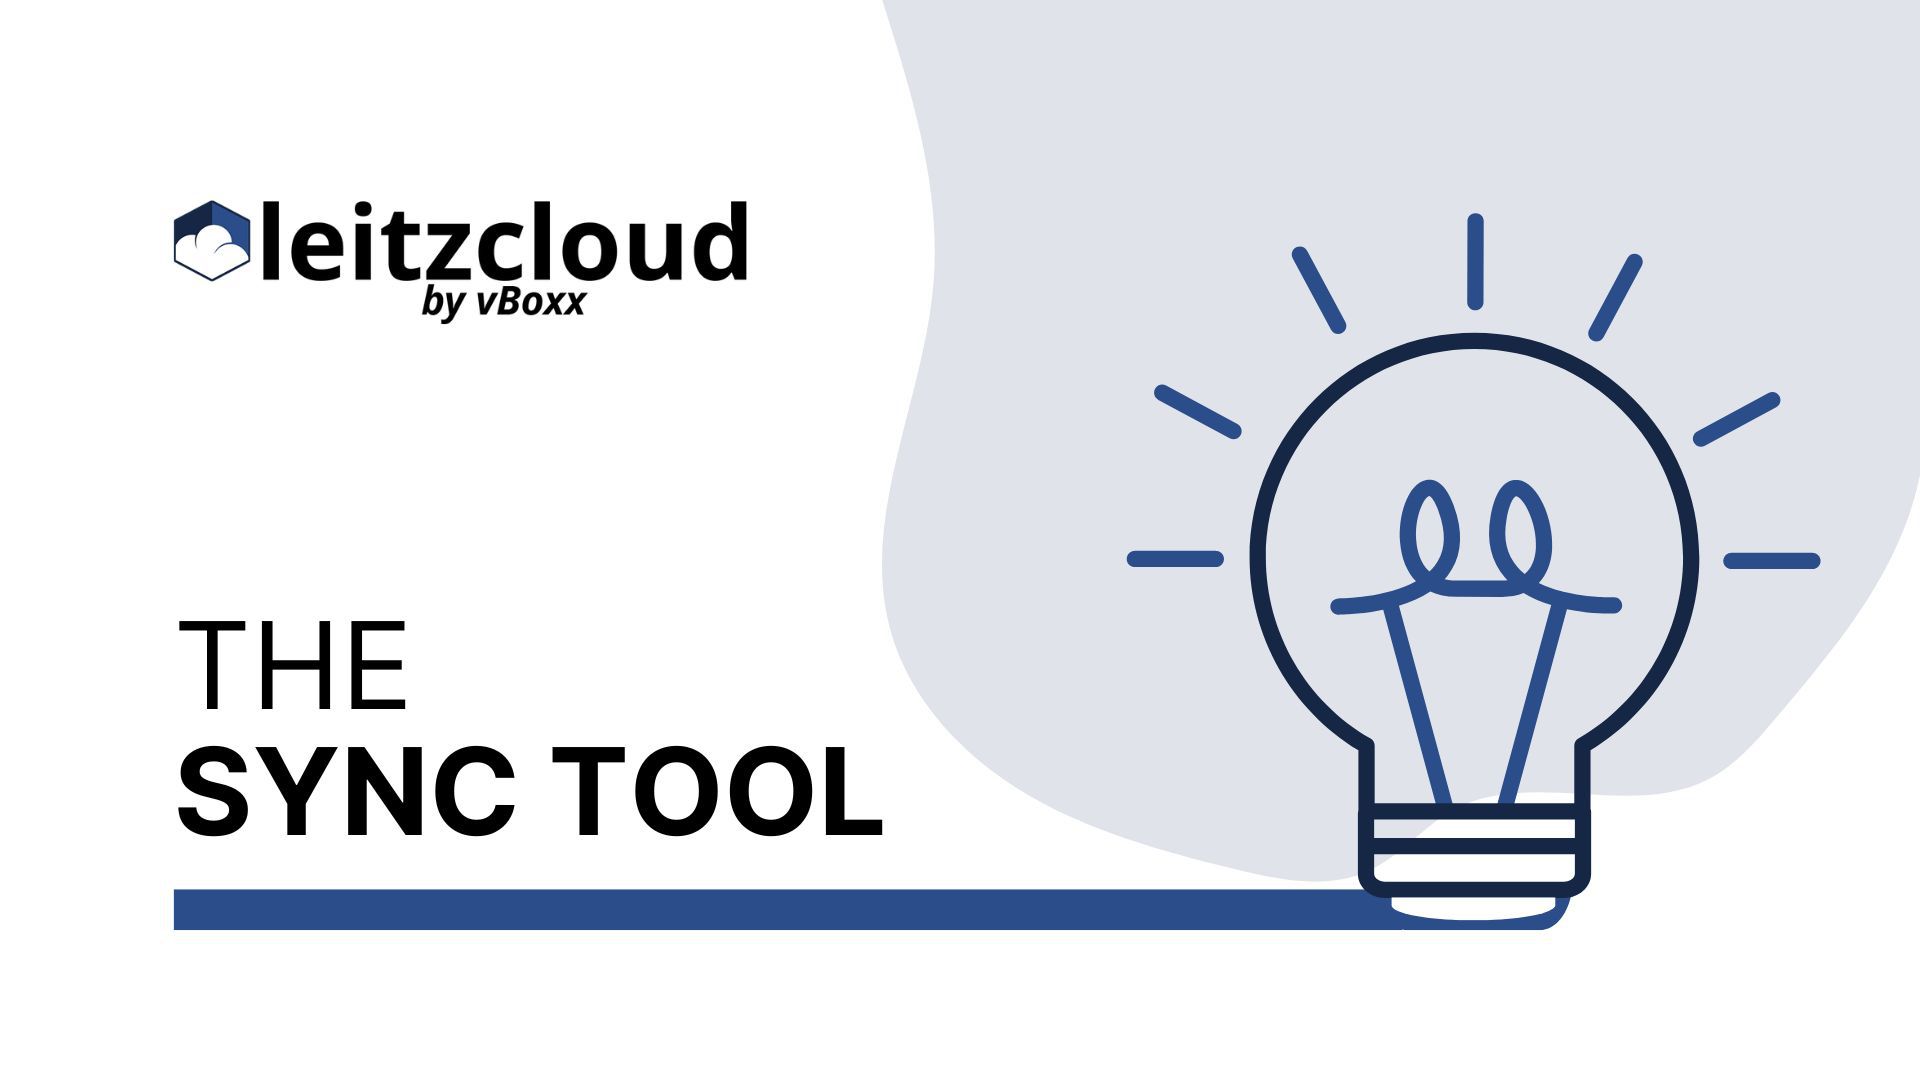 leitzcloud Sync-Tool video